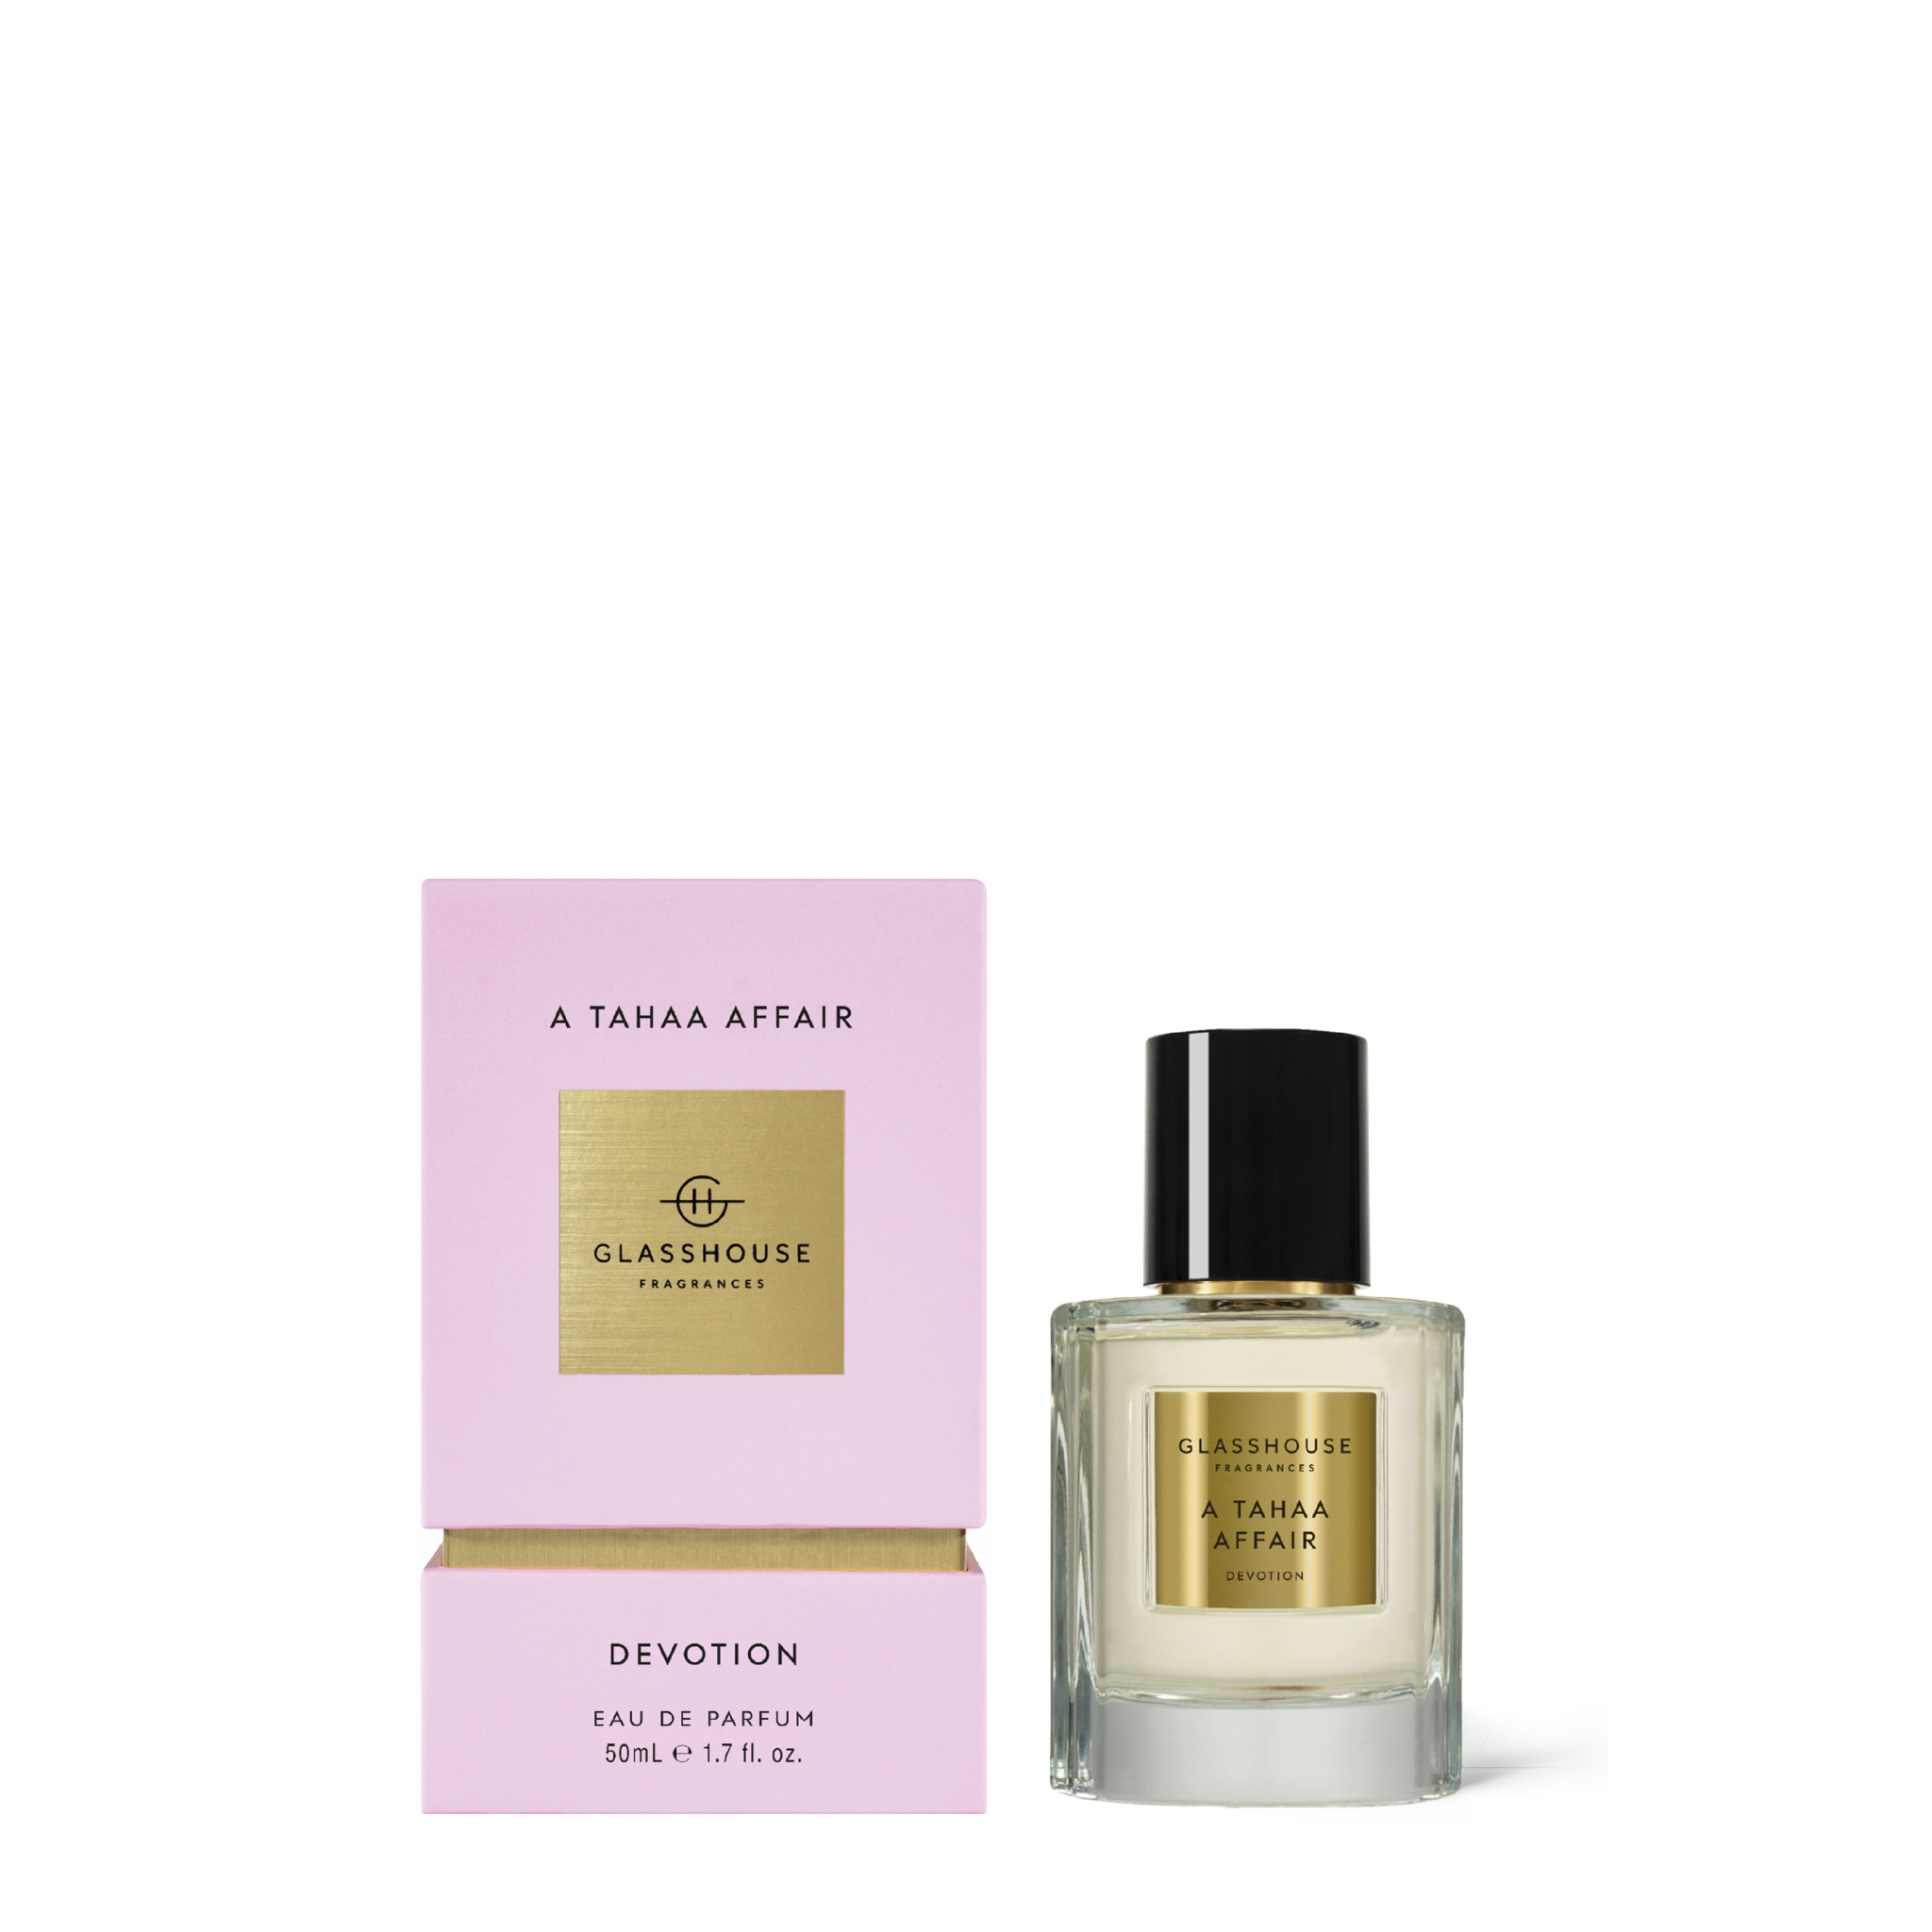 Glasshouse Fragrances 50ml Eau de Parfum - A TAHAA AFFAIR DEVOTION - Butterscotch Caramel & Jasmine